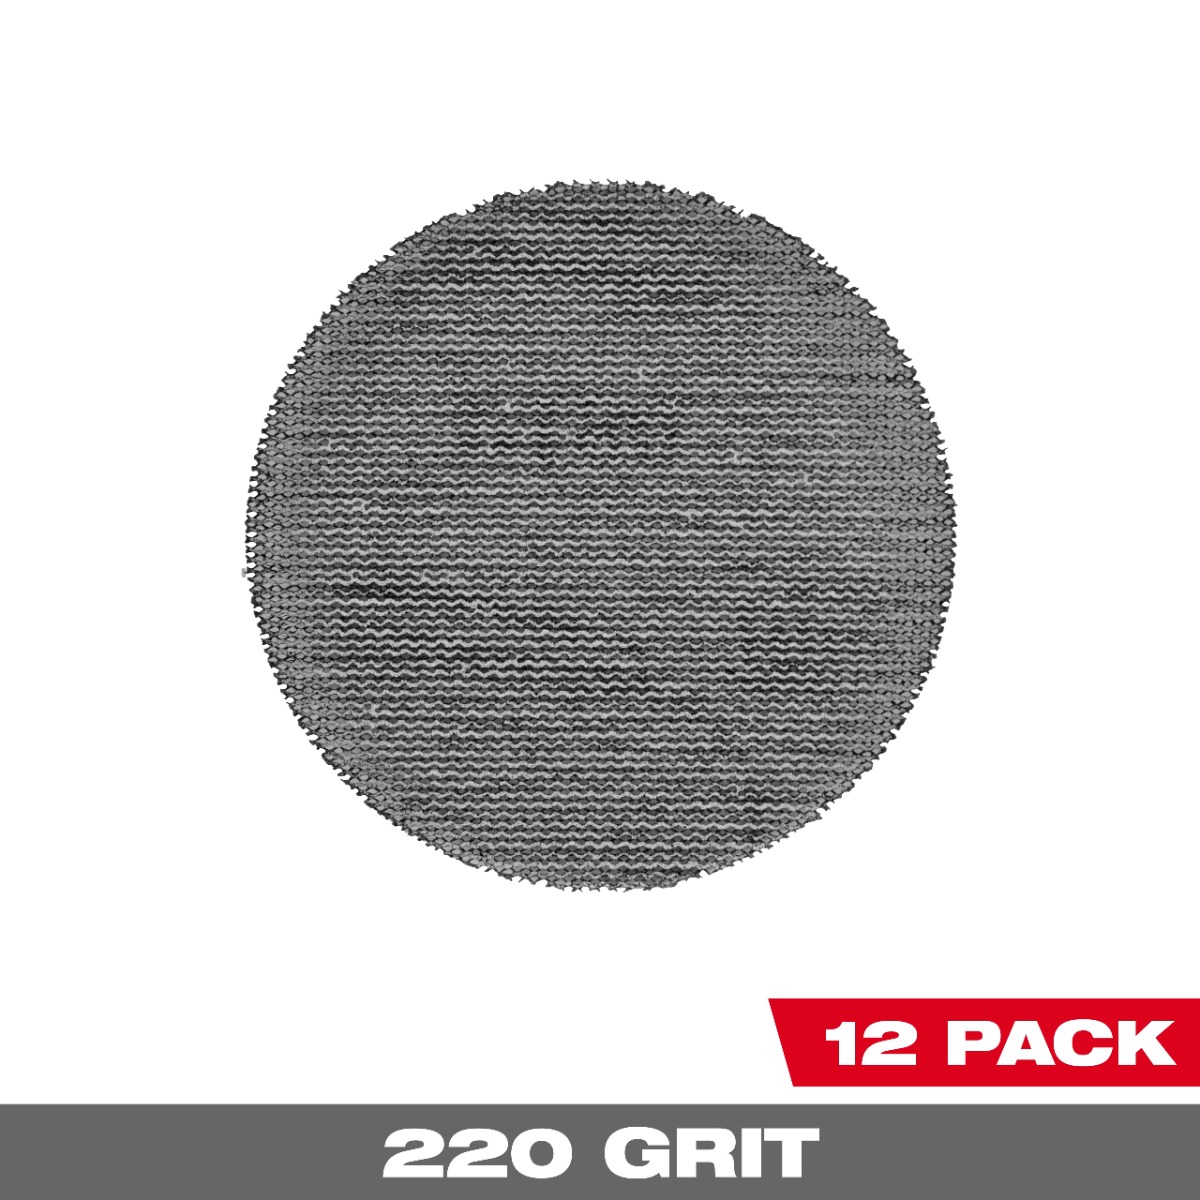 3” 220 Grit Mesh Sanding Discs with POWERGRID™ Tear Resistant Mesh – 12 pk + Pad Saver